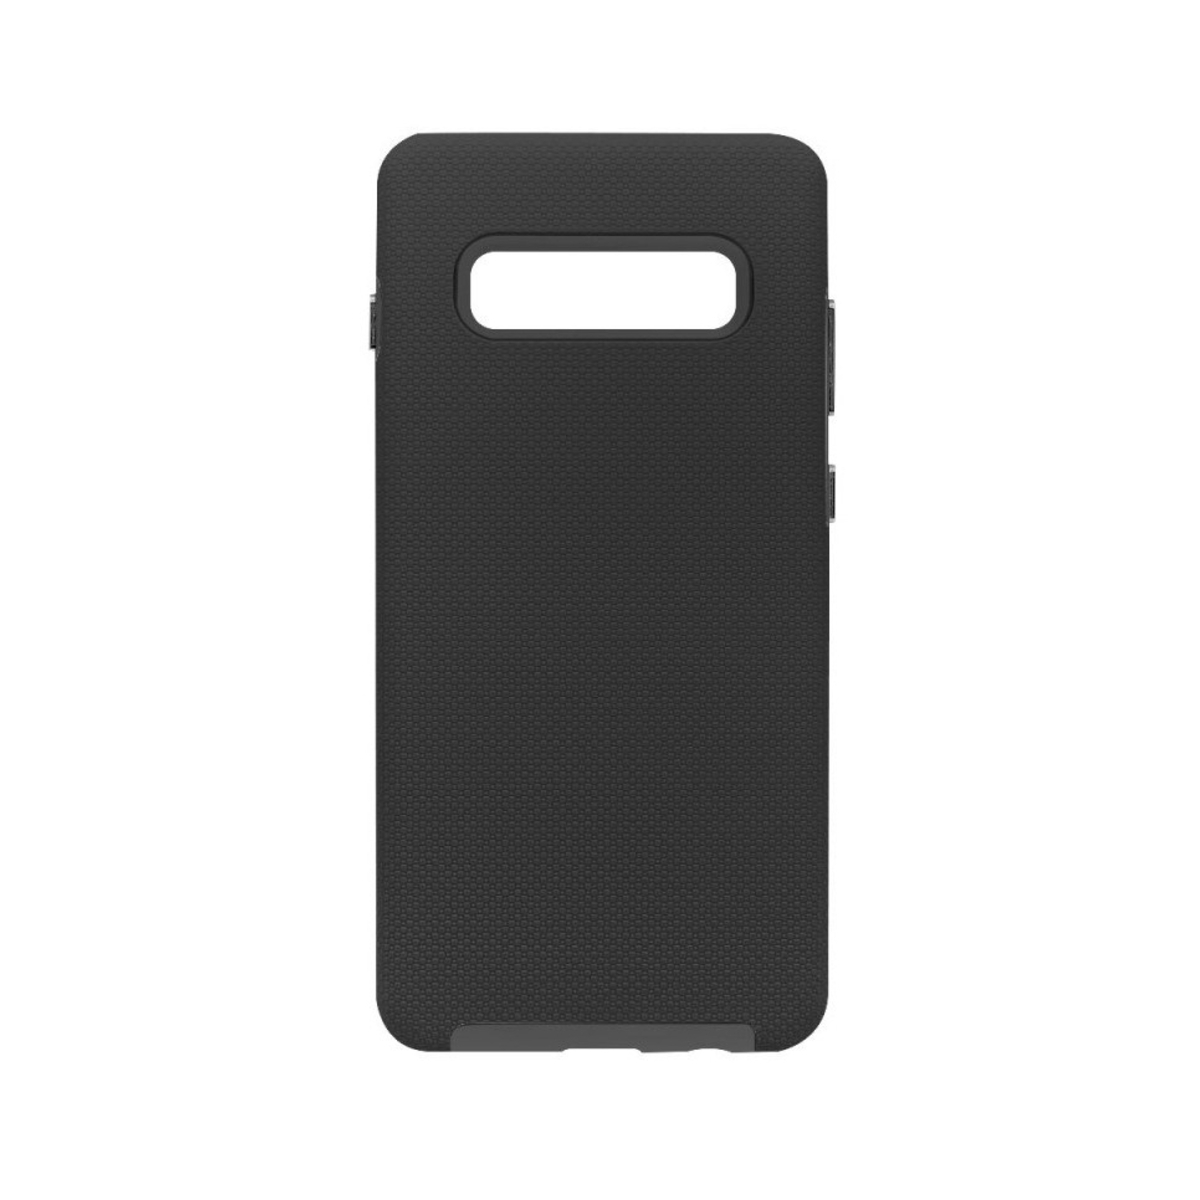 Чехол-накладка Devia KimKong Series case для смартфона Samsung Galaxy S10, черный